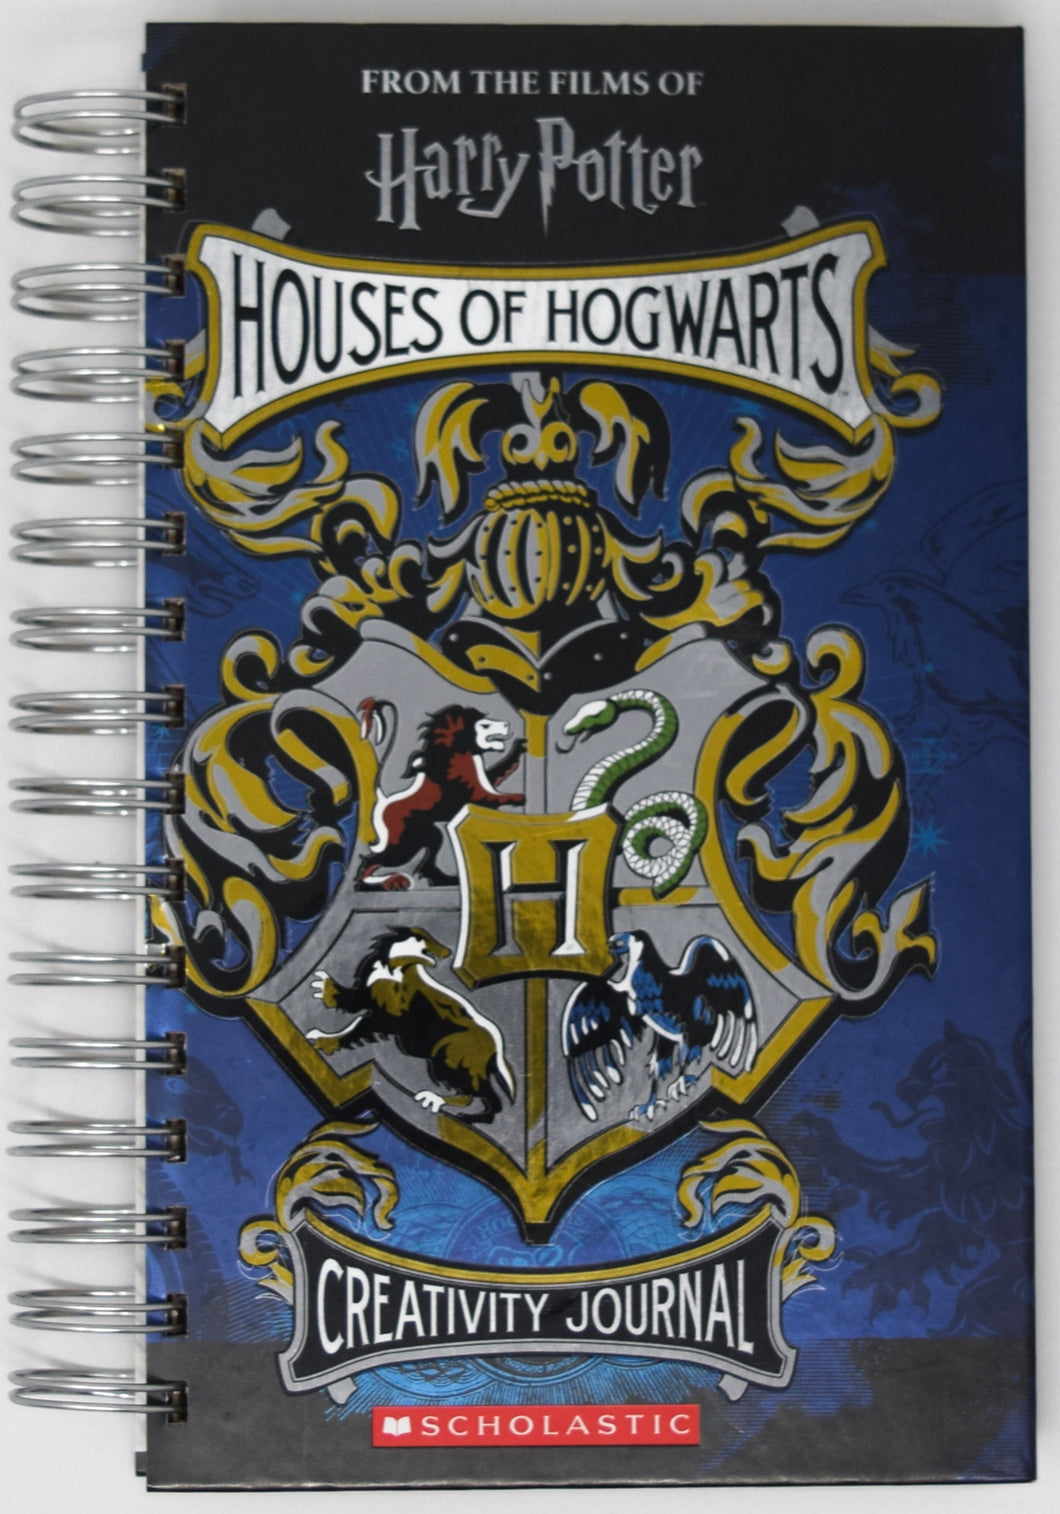 Harry Potter House of Hogwarts